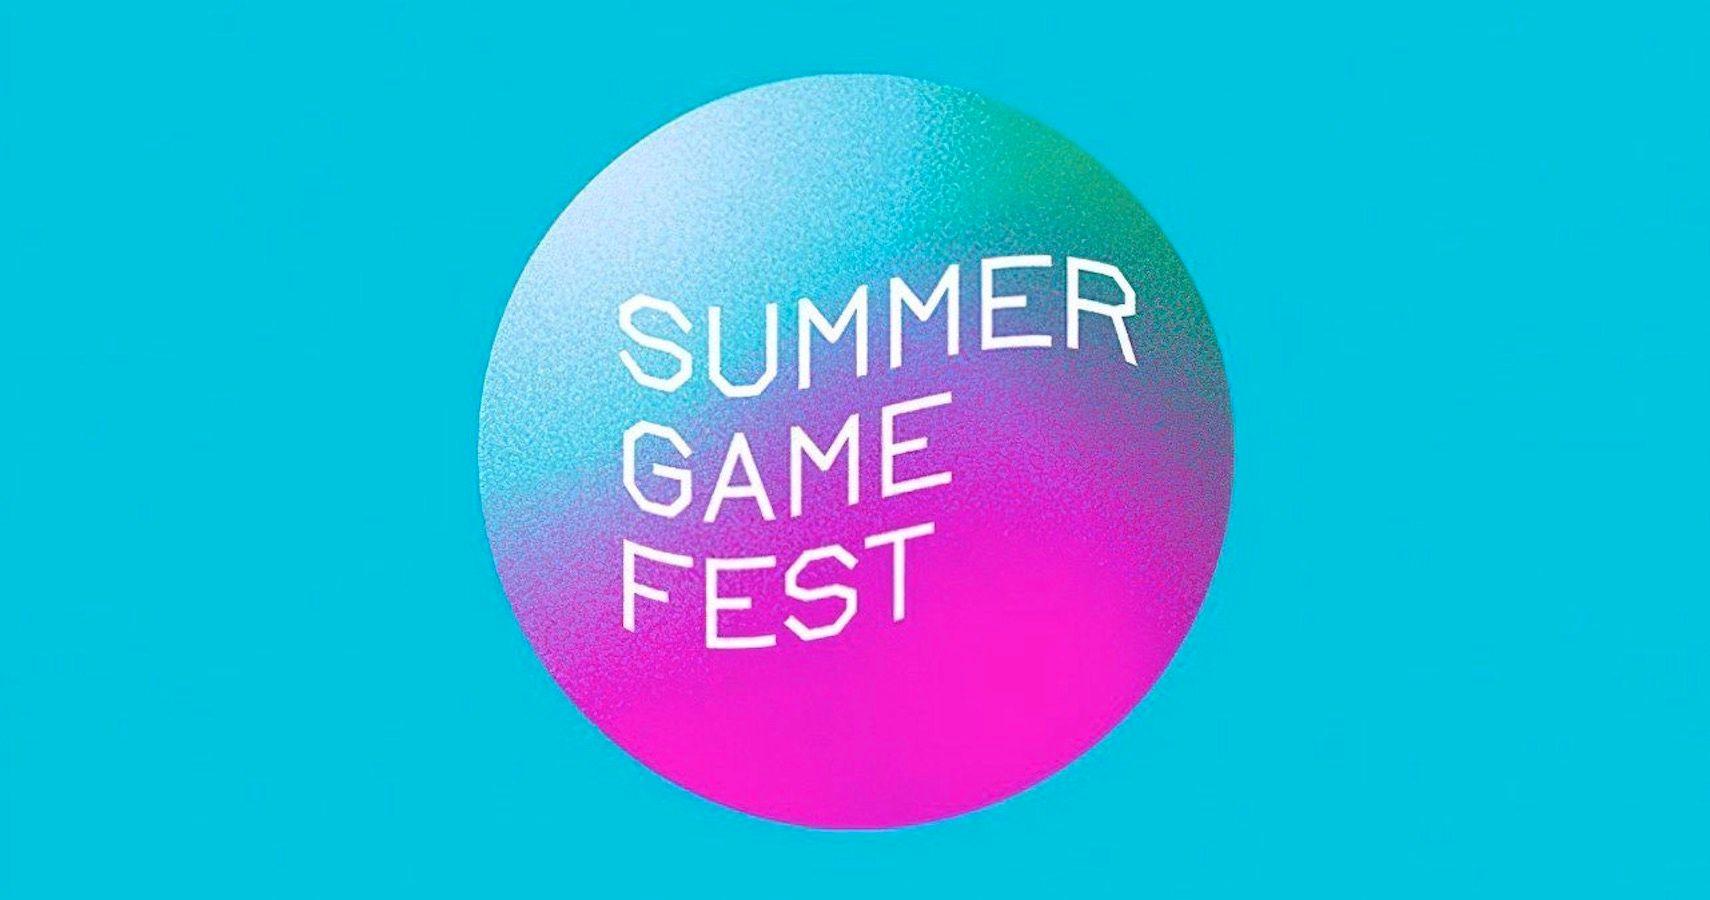 Summer games fest 2021 guide